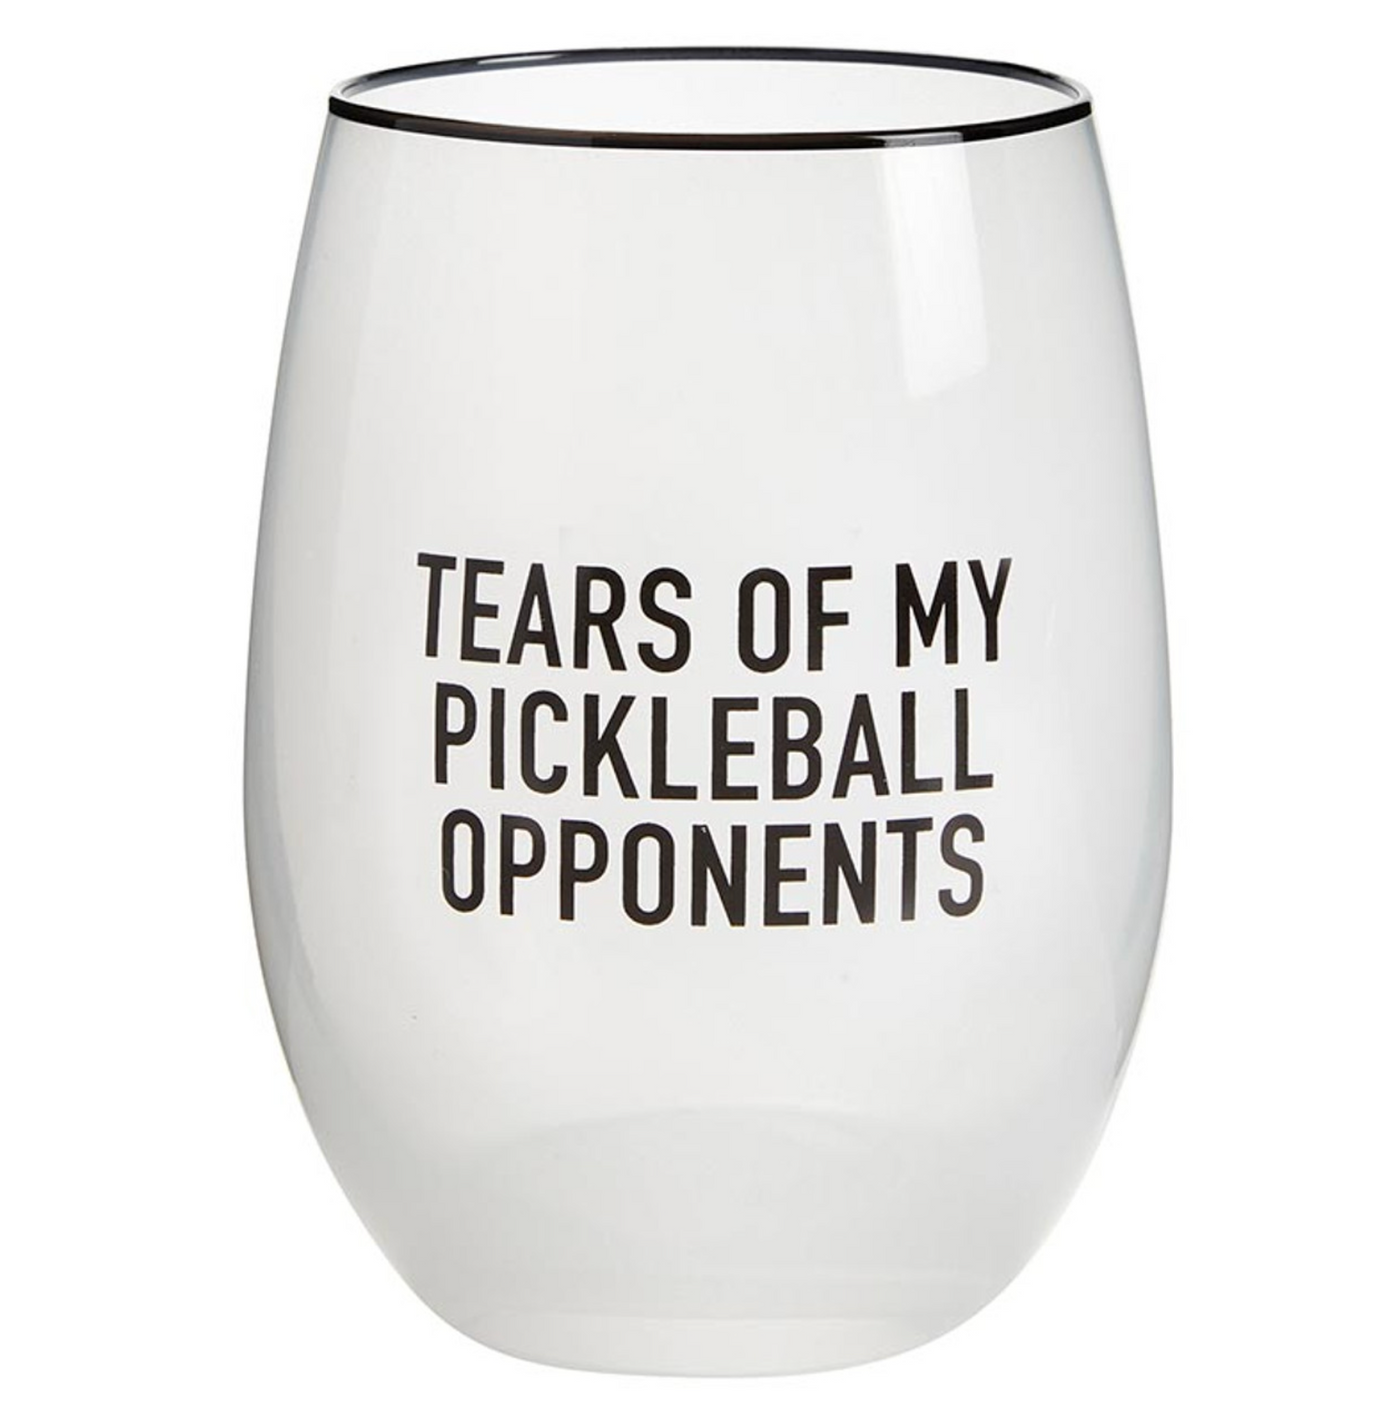 WINE GLASS "TEARS PICKLEBALL OPPONENTS"